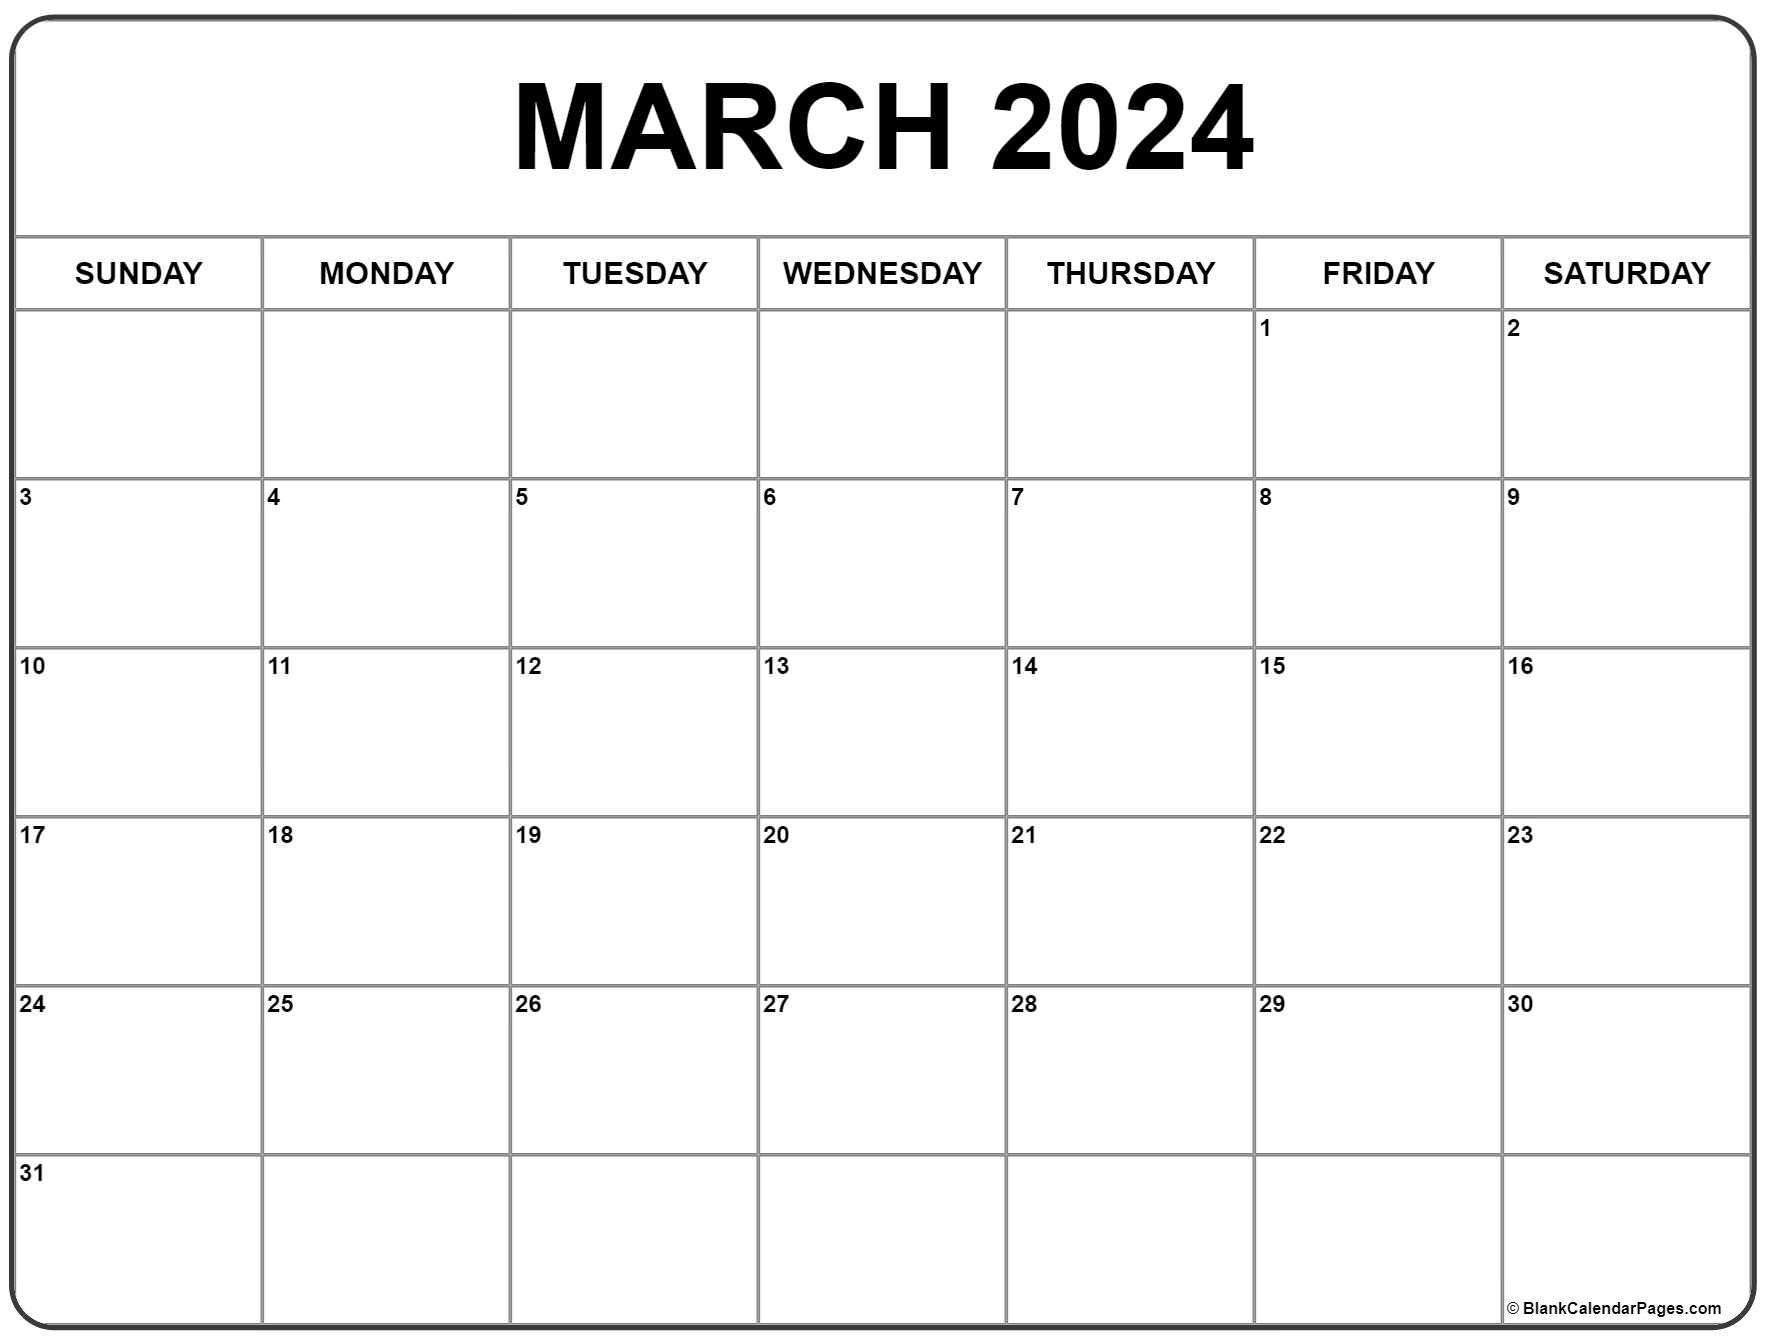 Free Printable March Calendar 2022 March 2022 Calendar | Free Printable Calendar Templates